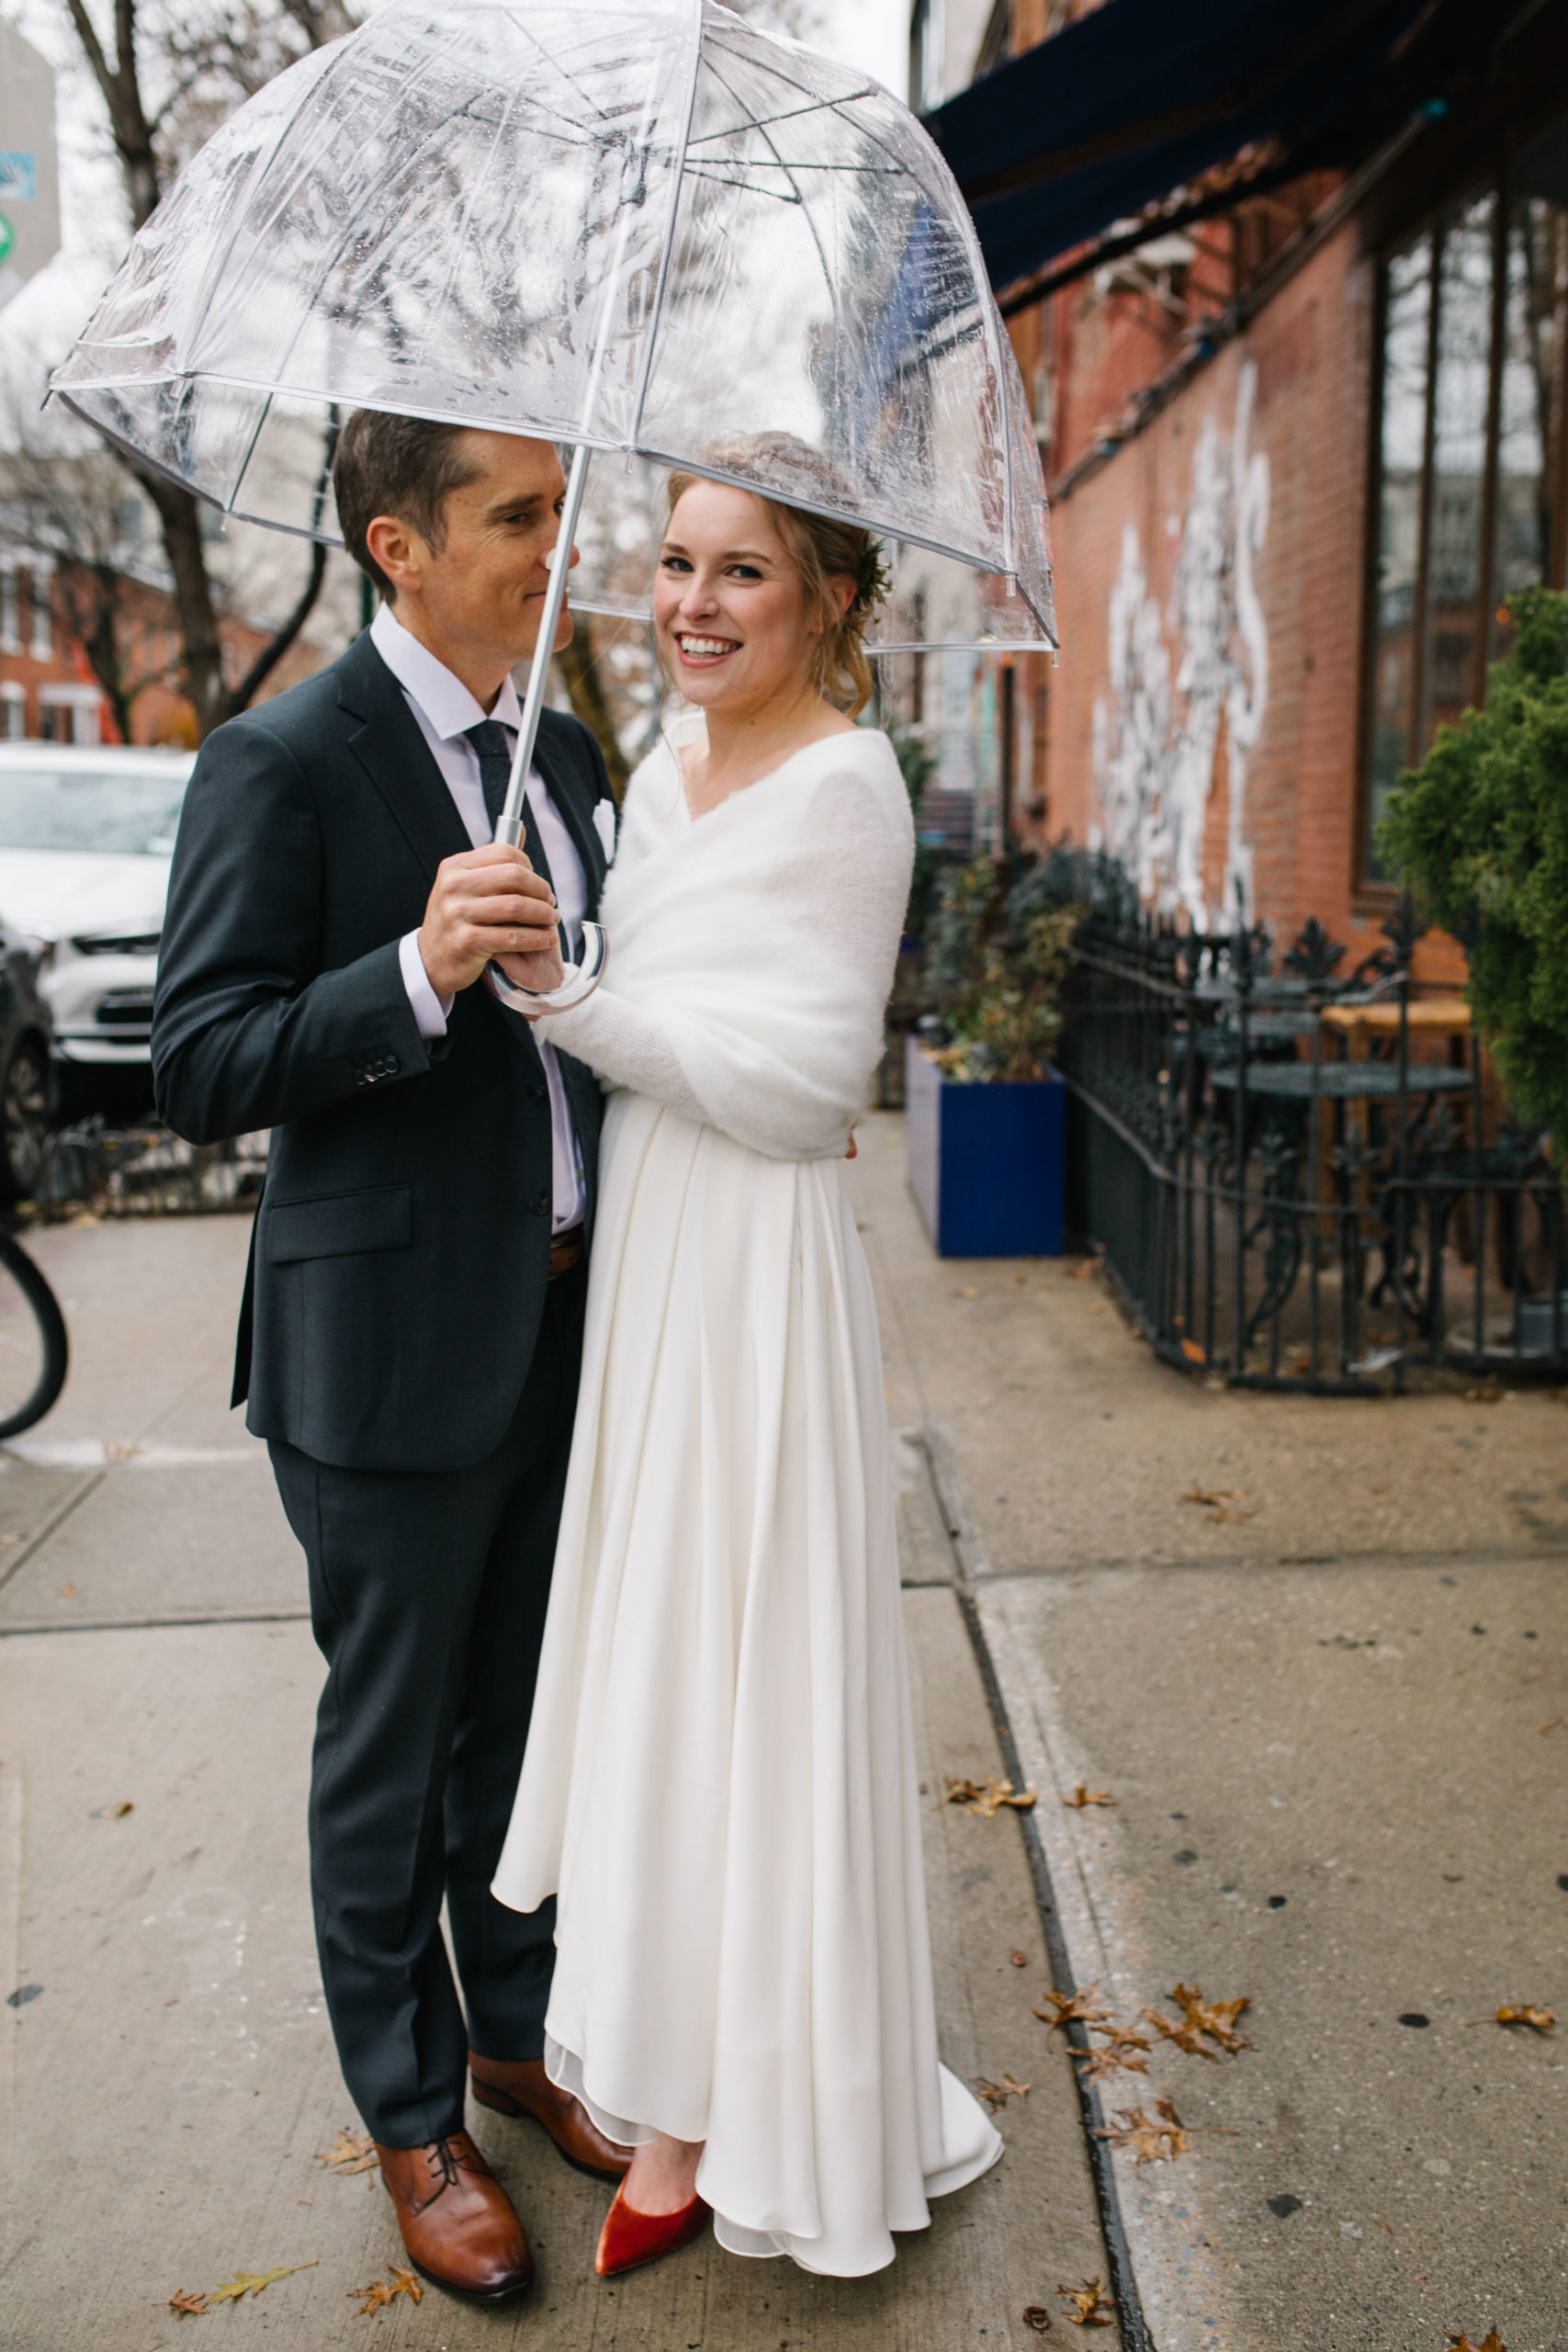 Clear Umbrella on a Rainy Wedding Day